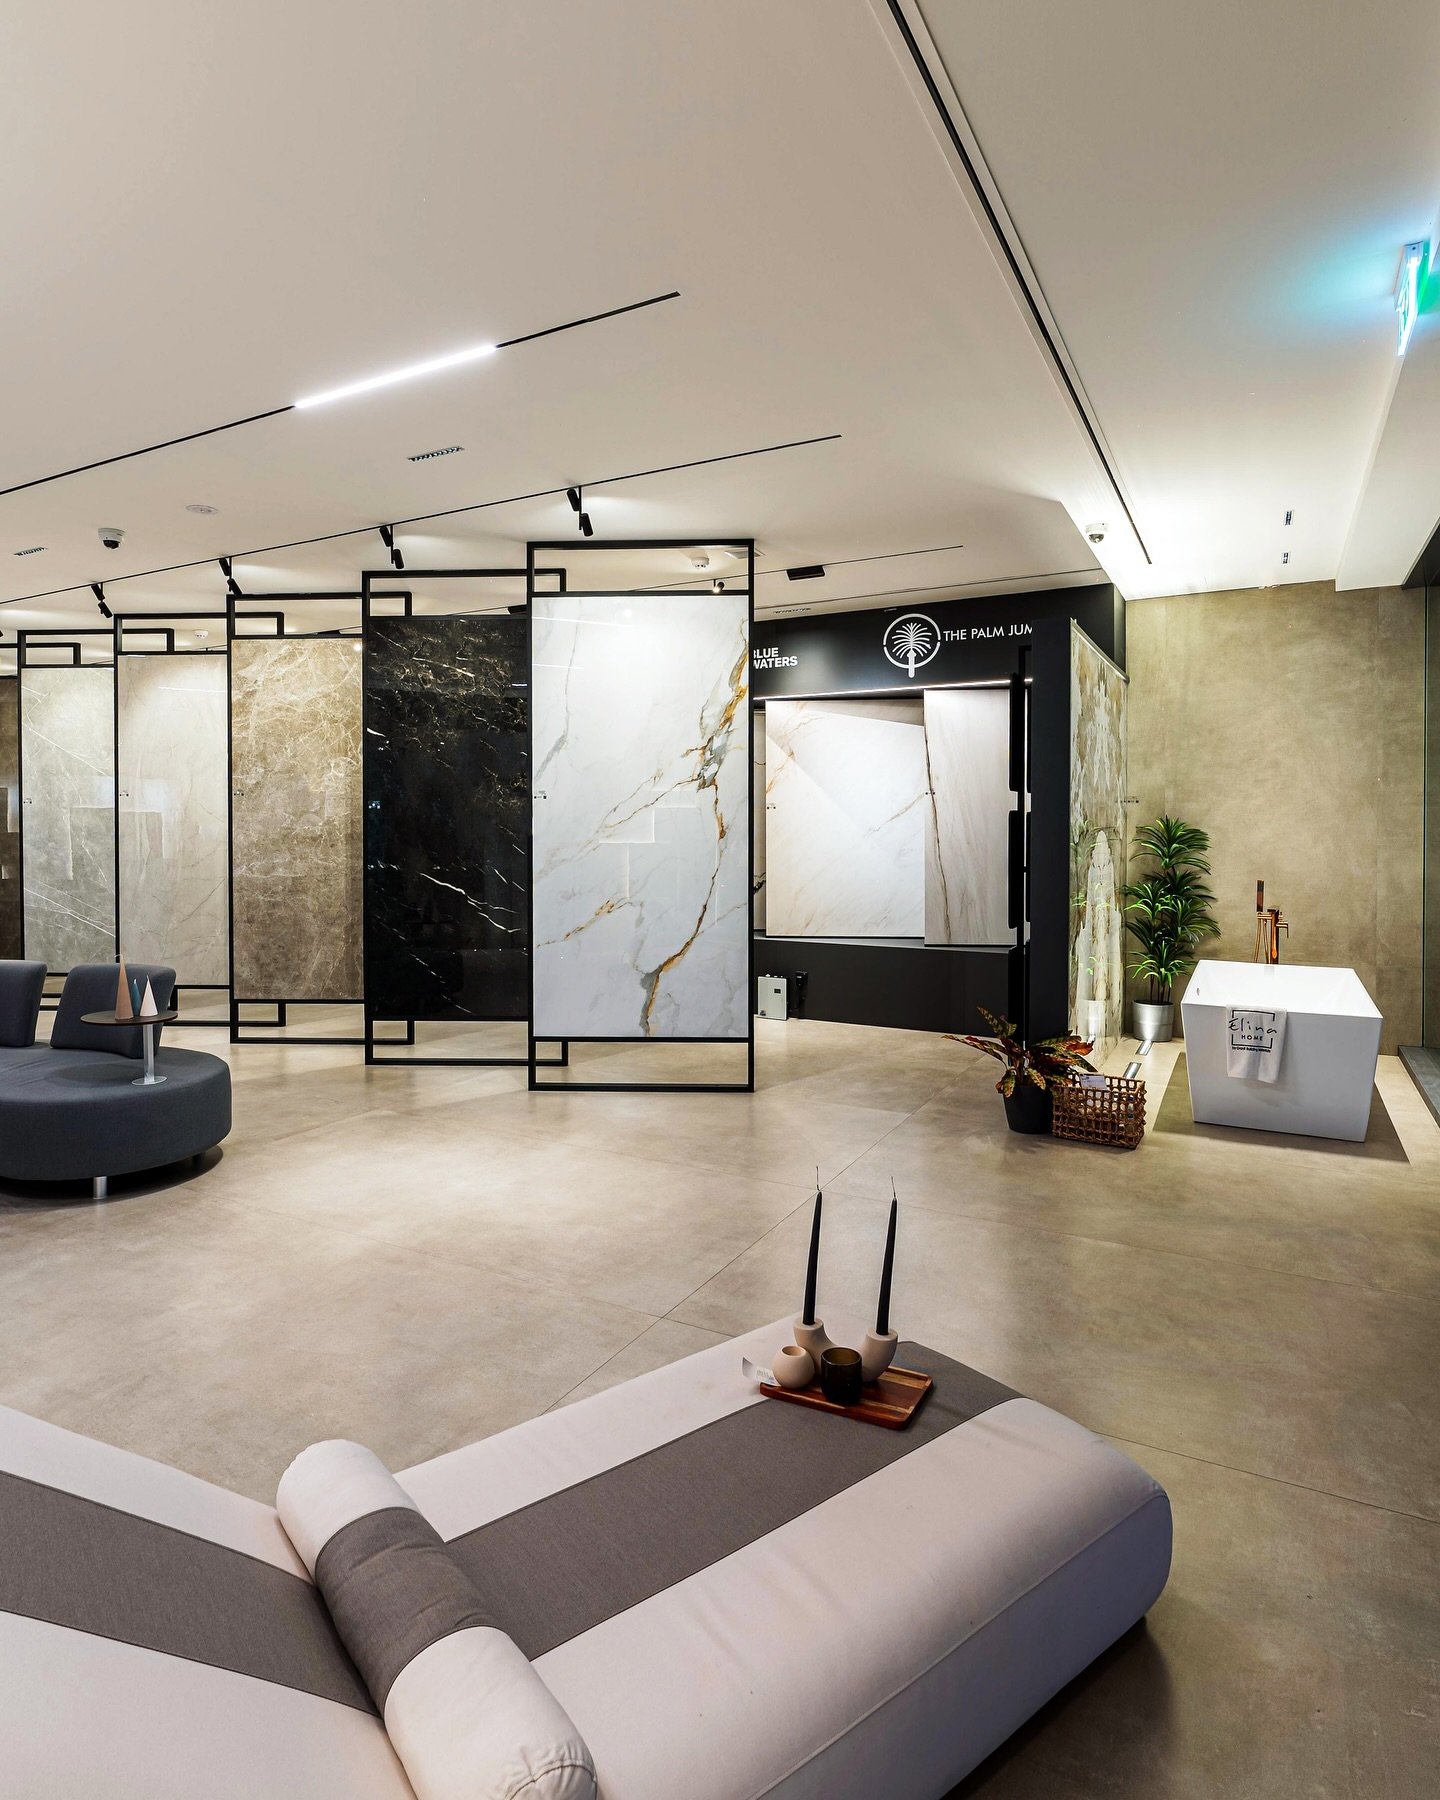 With elegance comes simplicity and beauty. 

Visit our showroom:
📍Elina by Graniti: Salah Al Dine Street Deira, Dubai, UAE
📞+971 52 310 6288